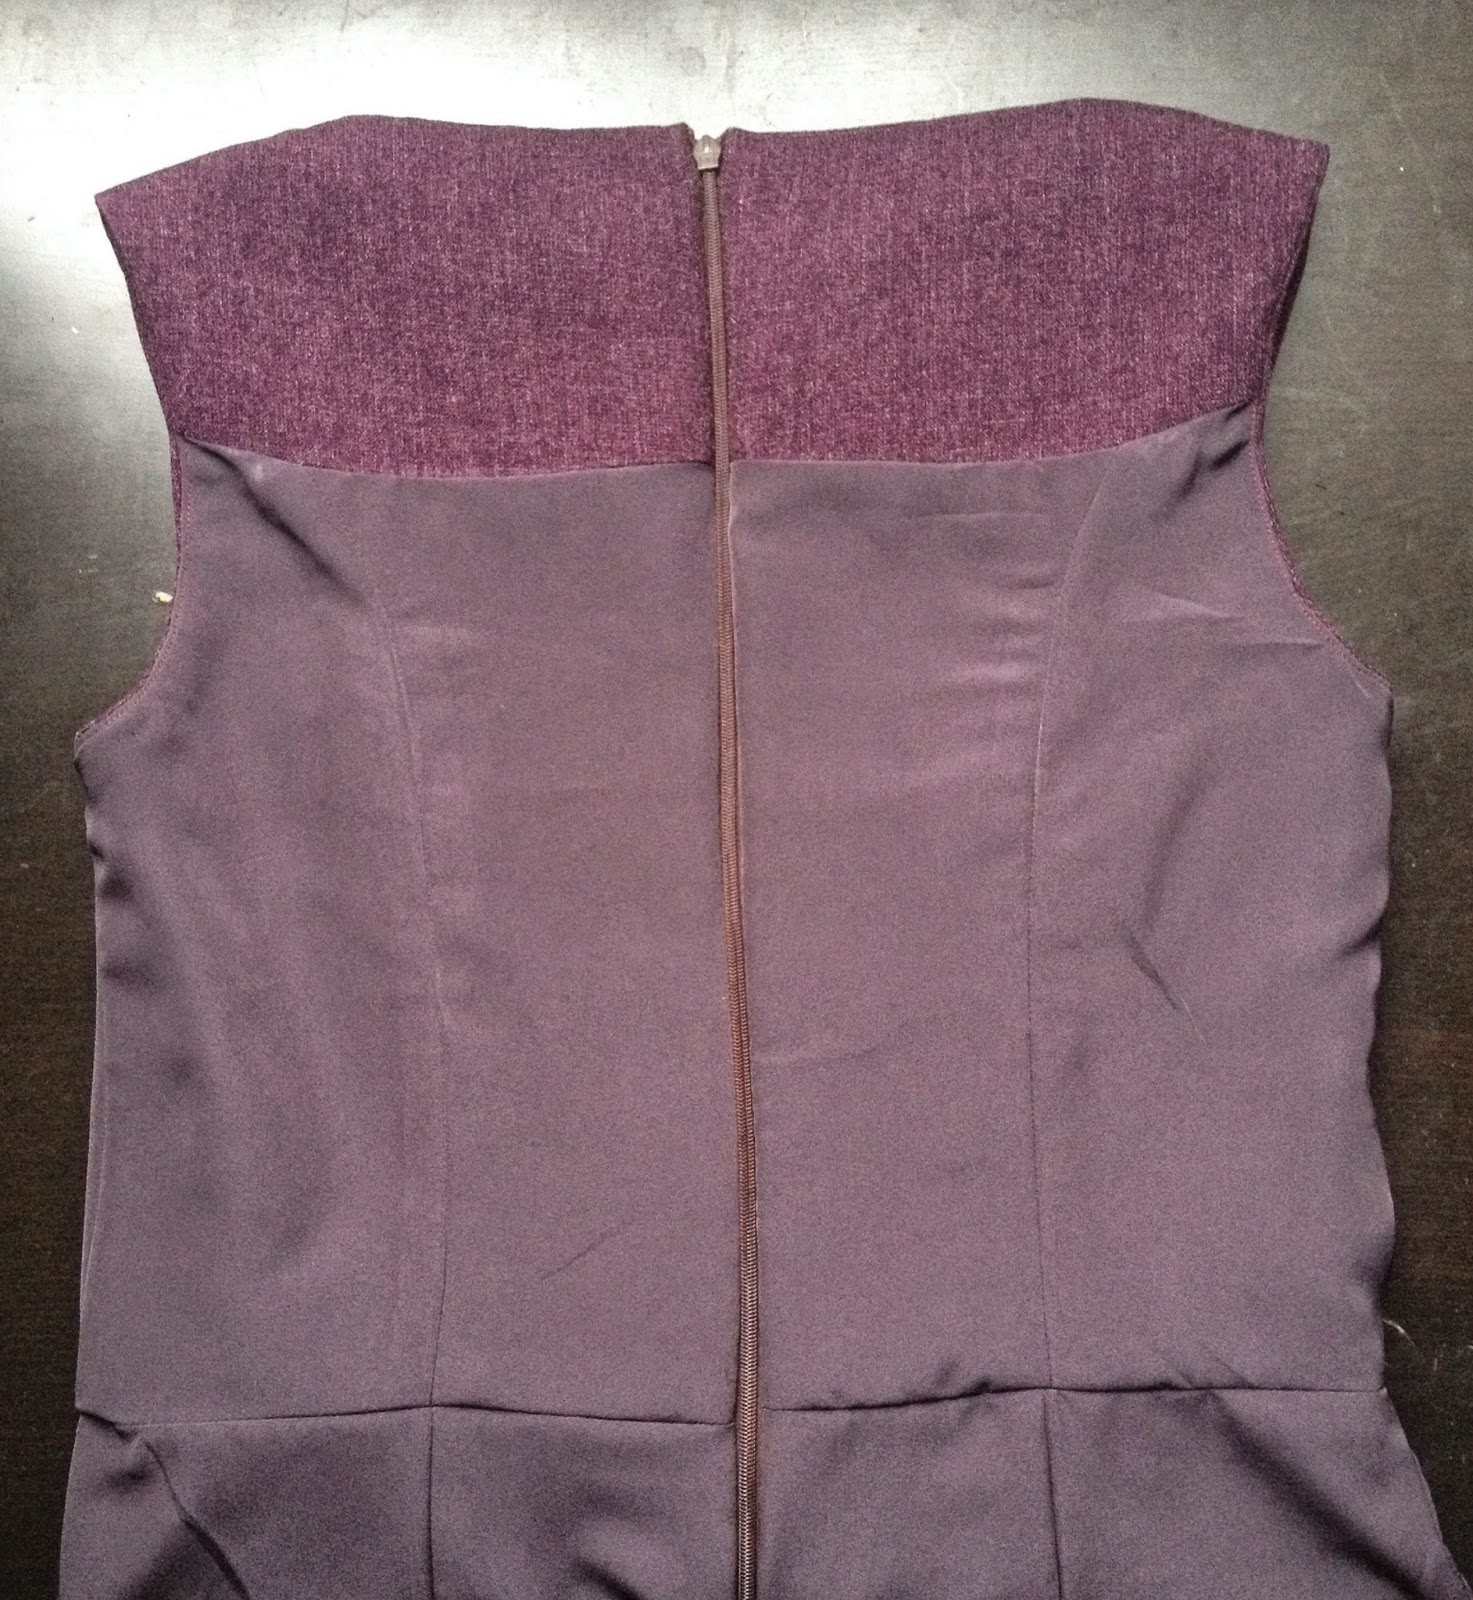 Diary of a Chain Stitcher: Purple Marbella Dress from Itch to Stitch